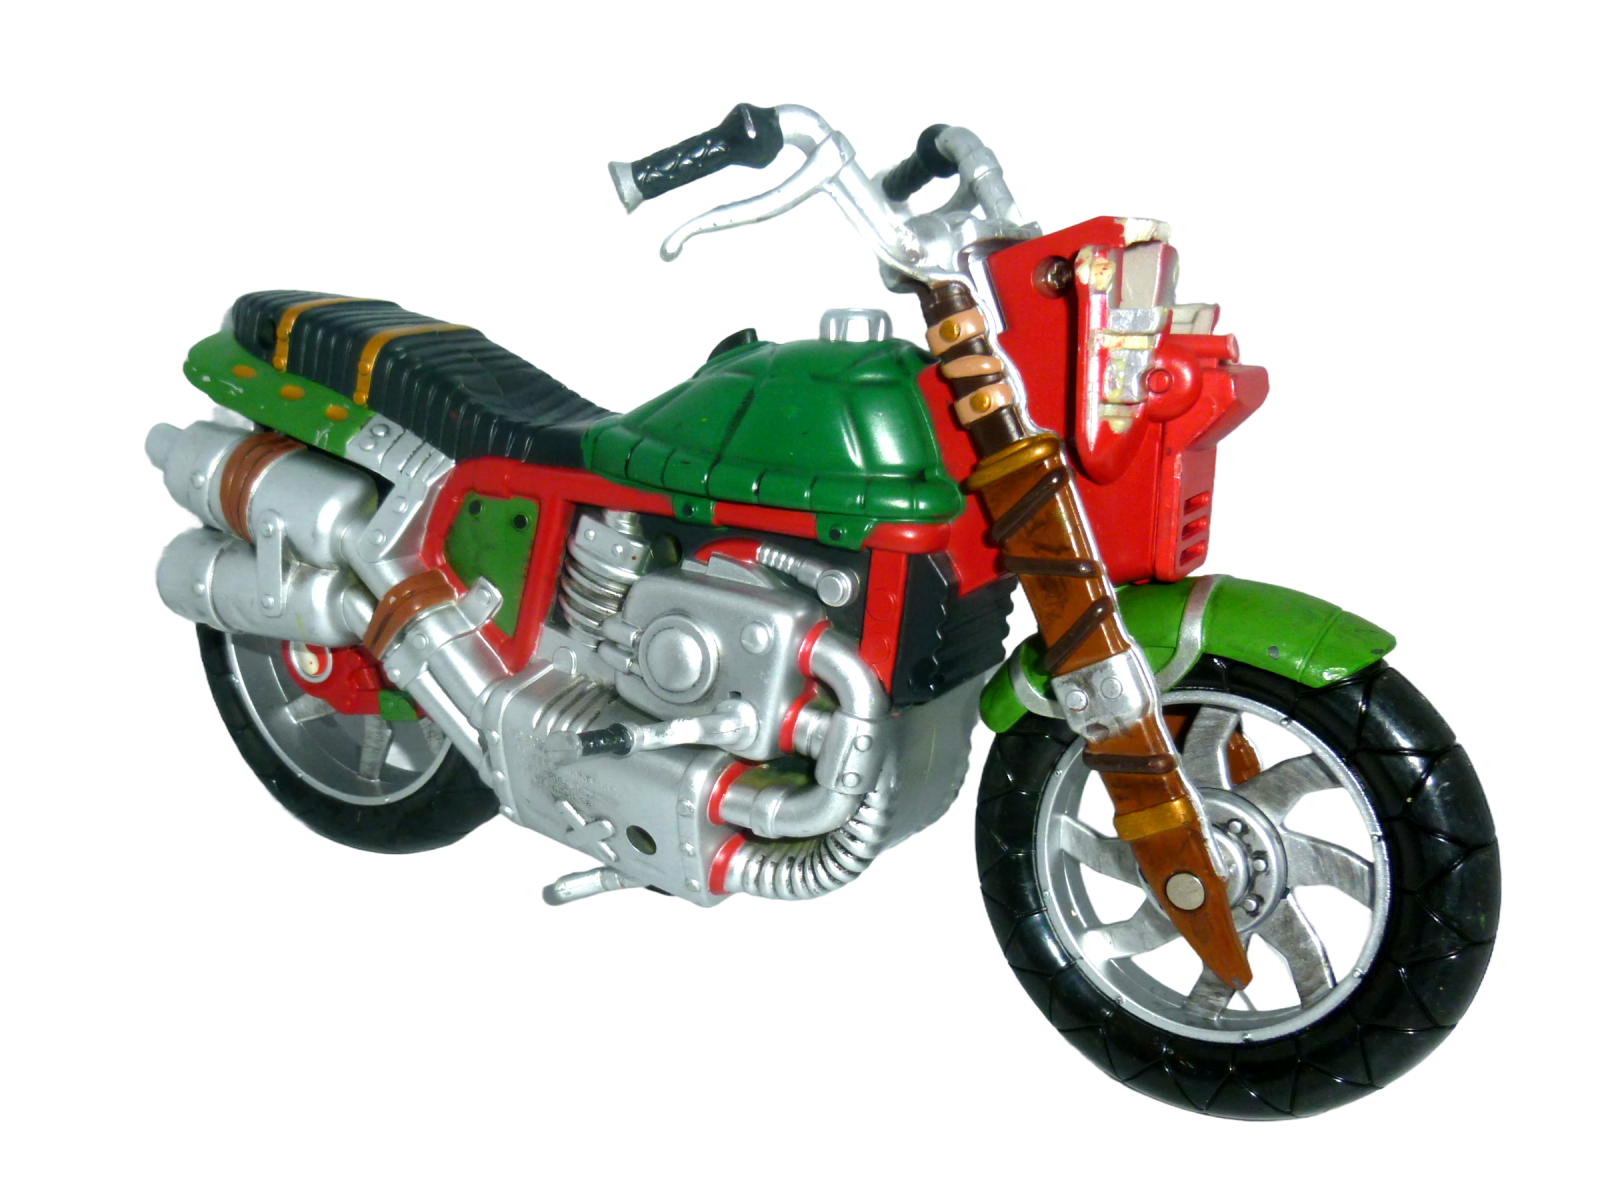 Motorcycle - defekt 2002 Mirage Studios / Playmates Toys